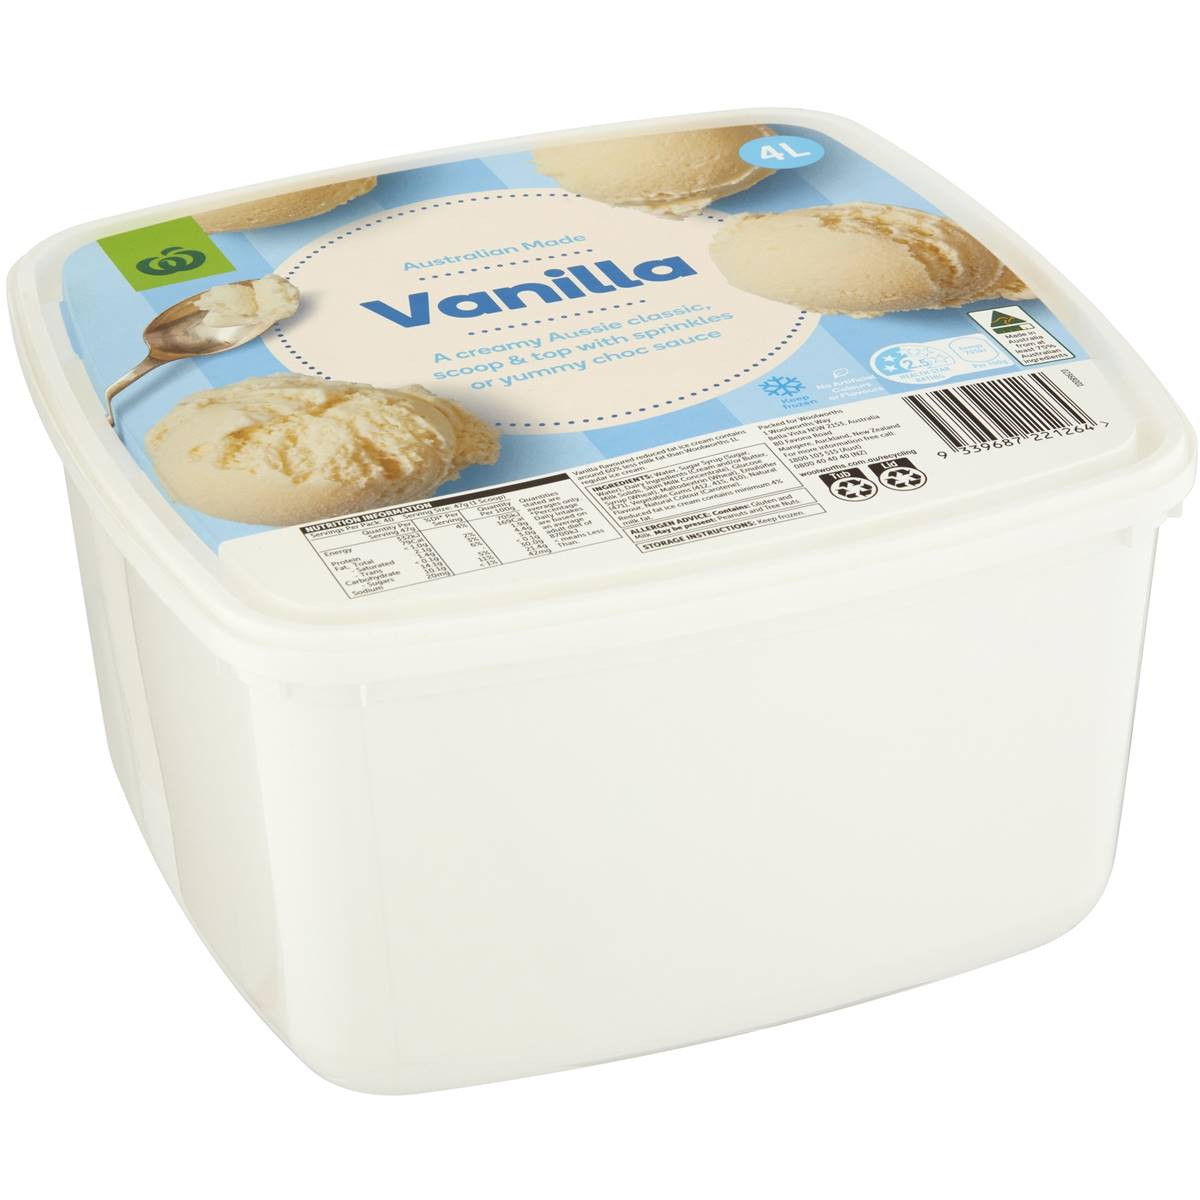 Calories in Woolworths Vanilla Ice Cream